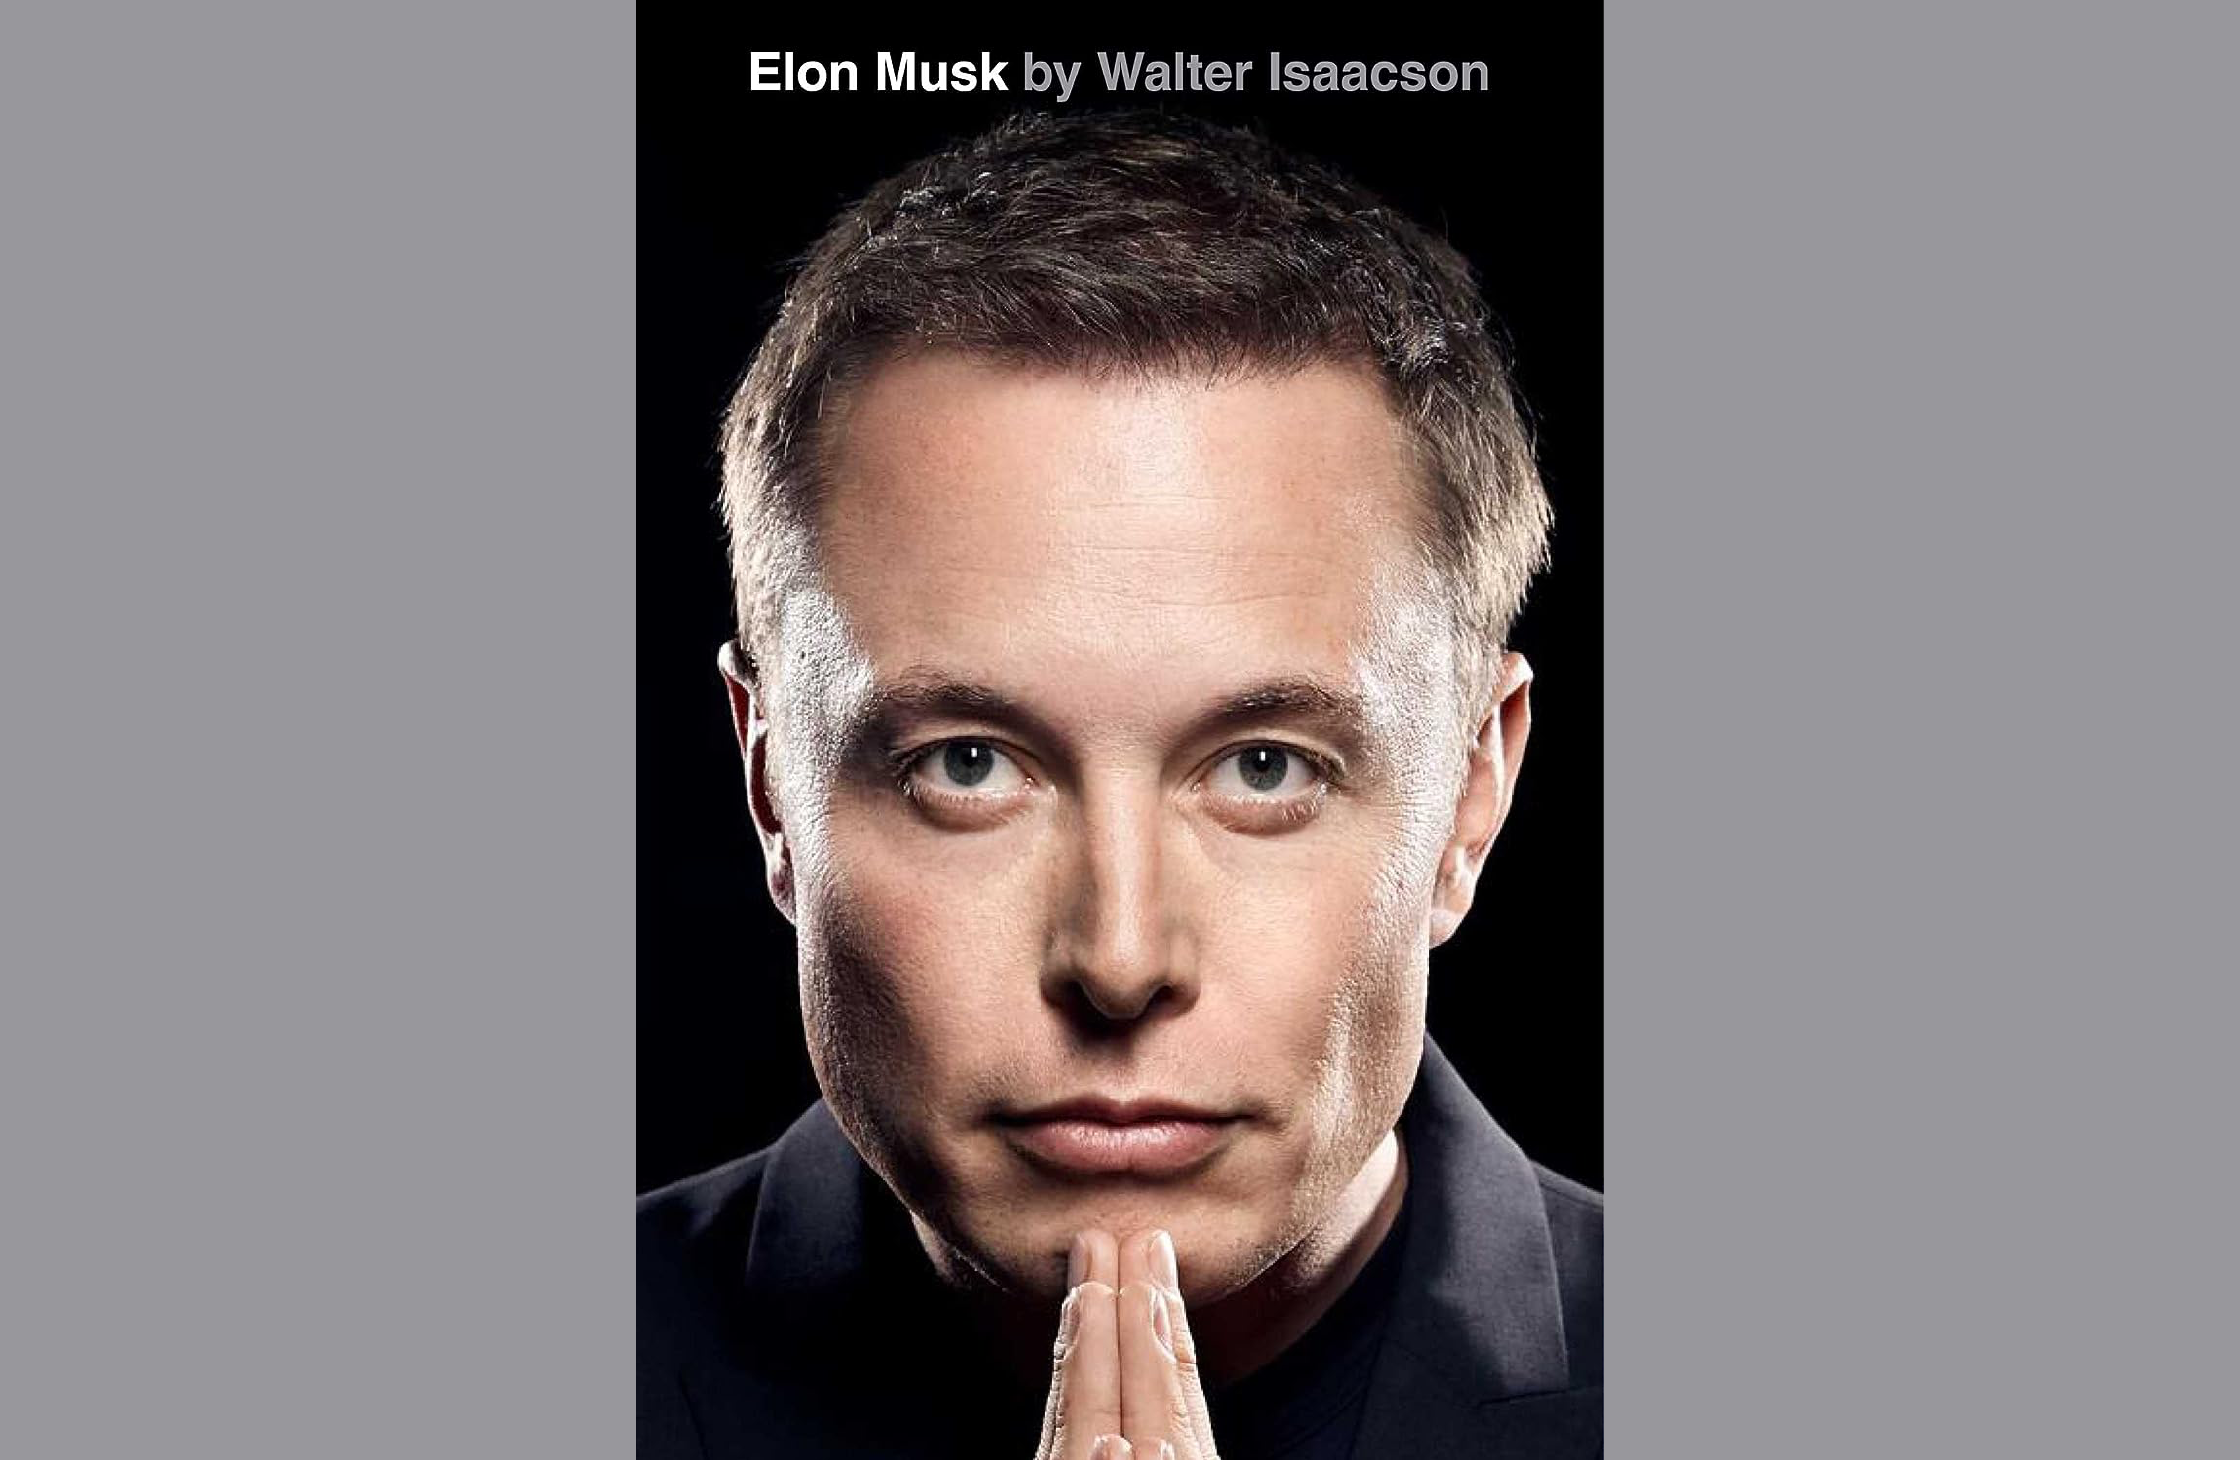 Summary: Elon Musk by Walter Isaacson